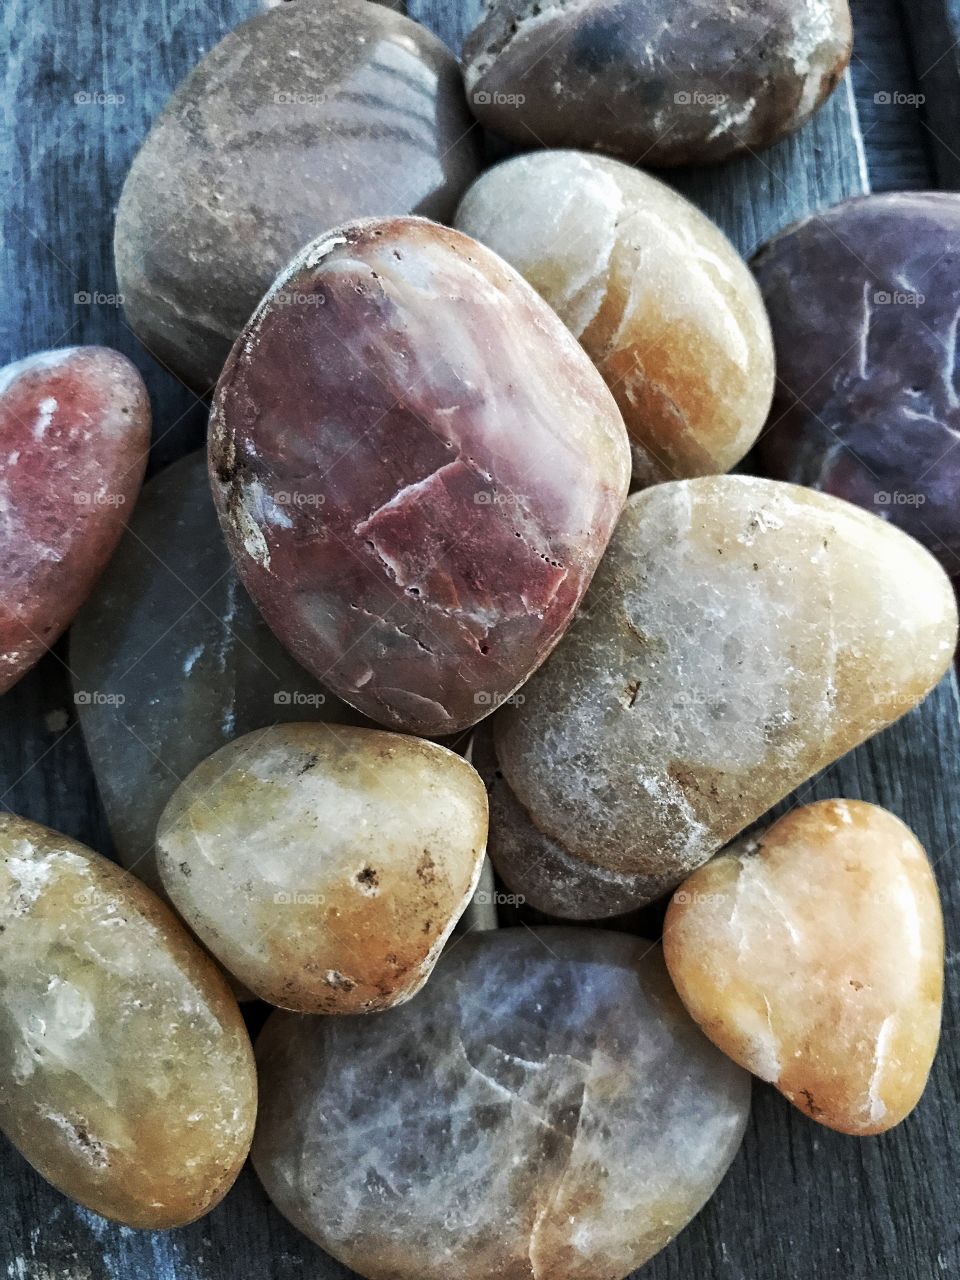 Small stones